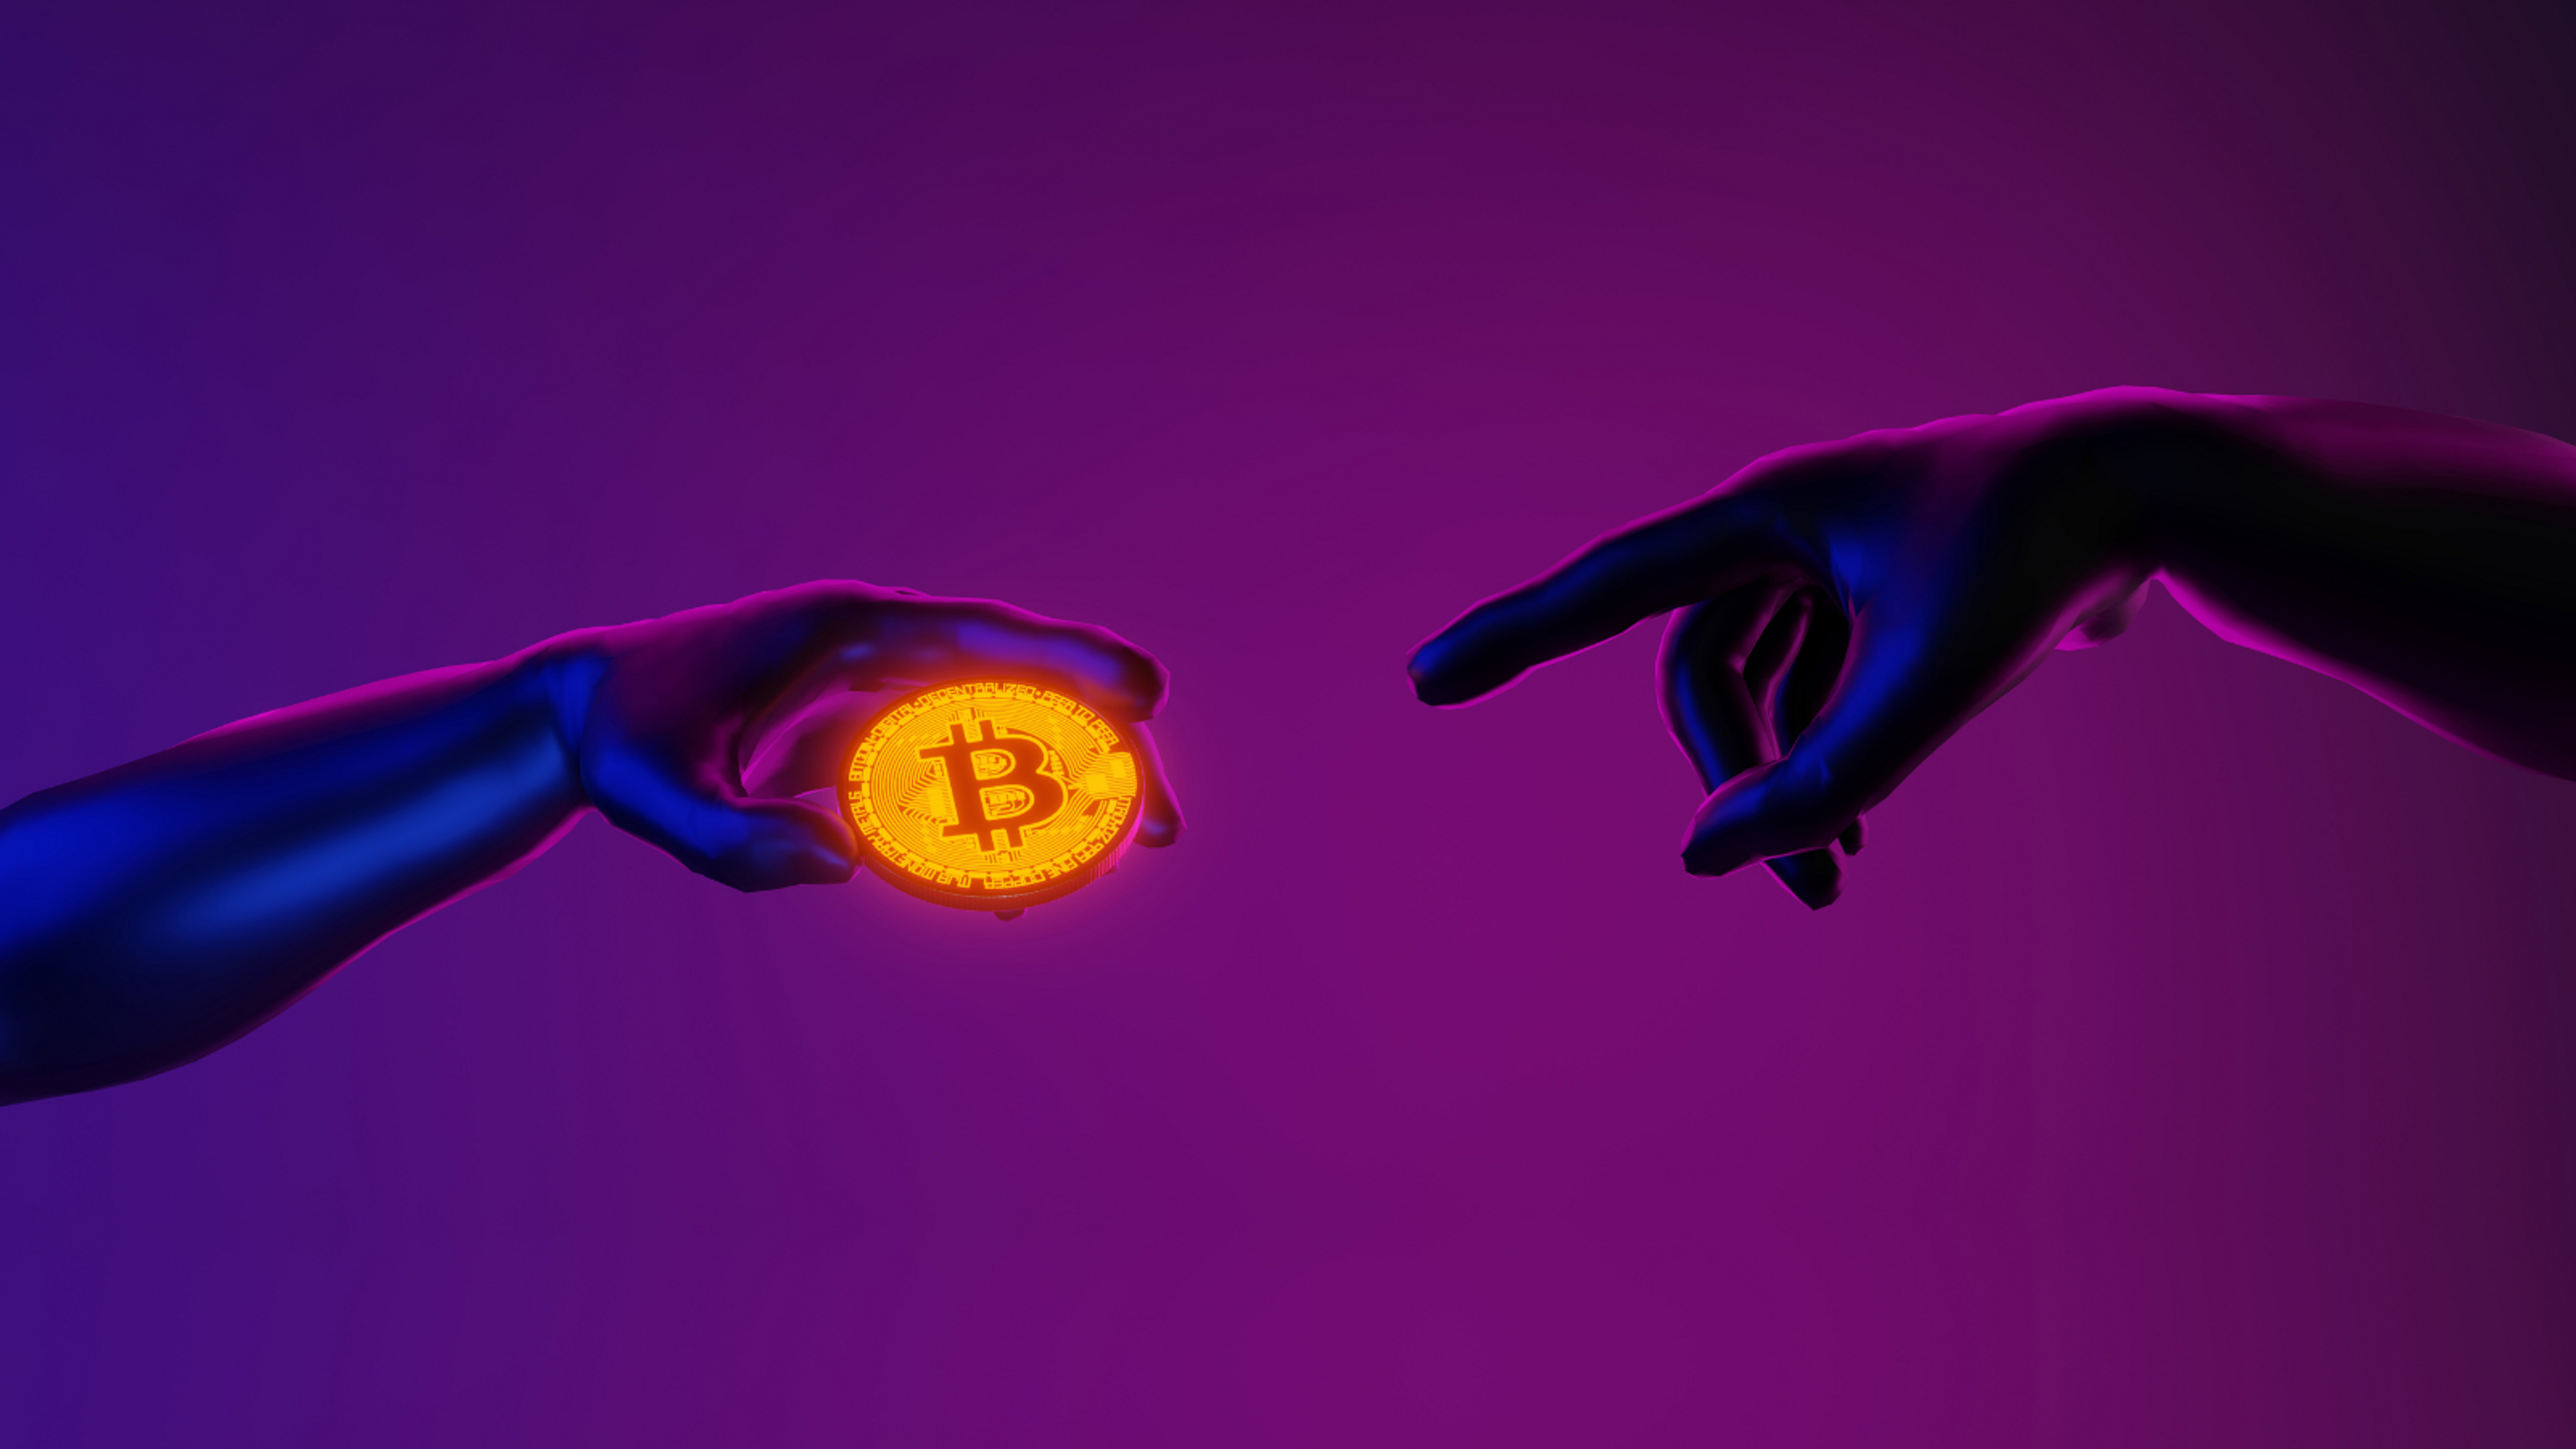 Hands on purple background reaching toward bitcoin